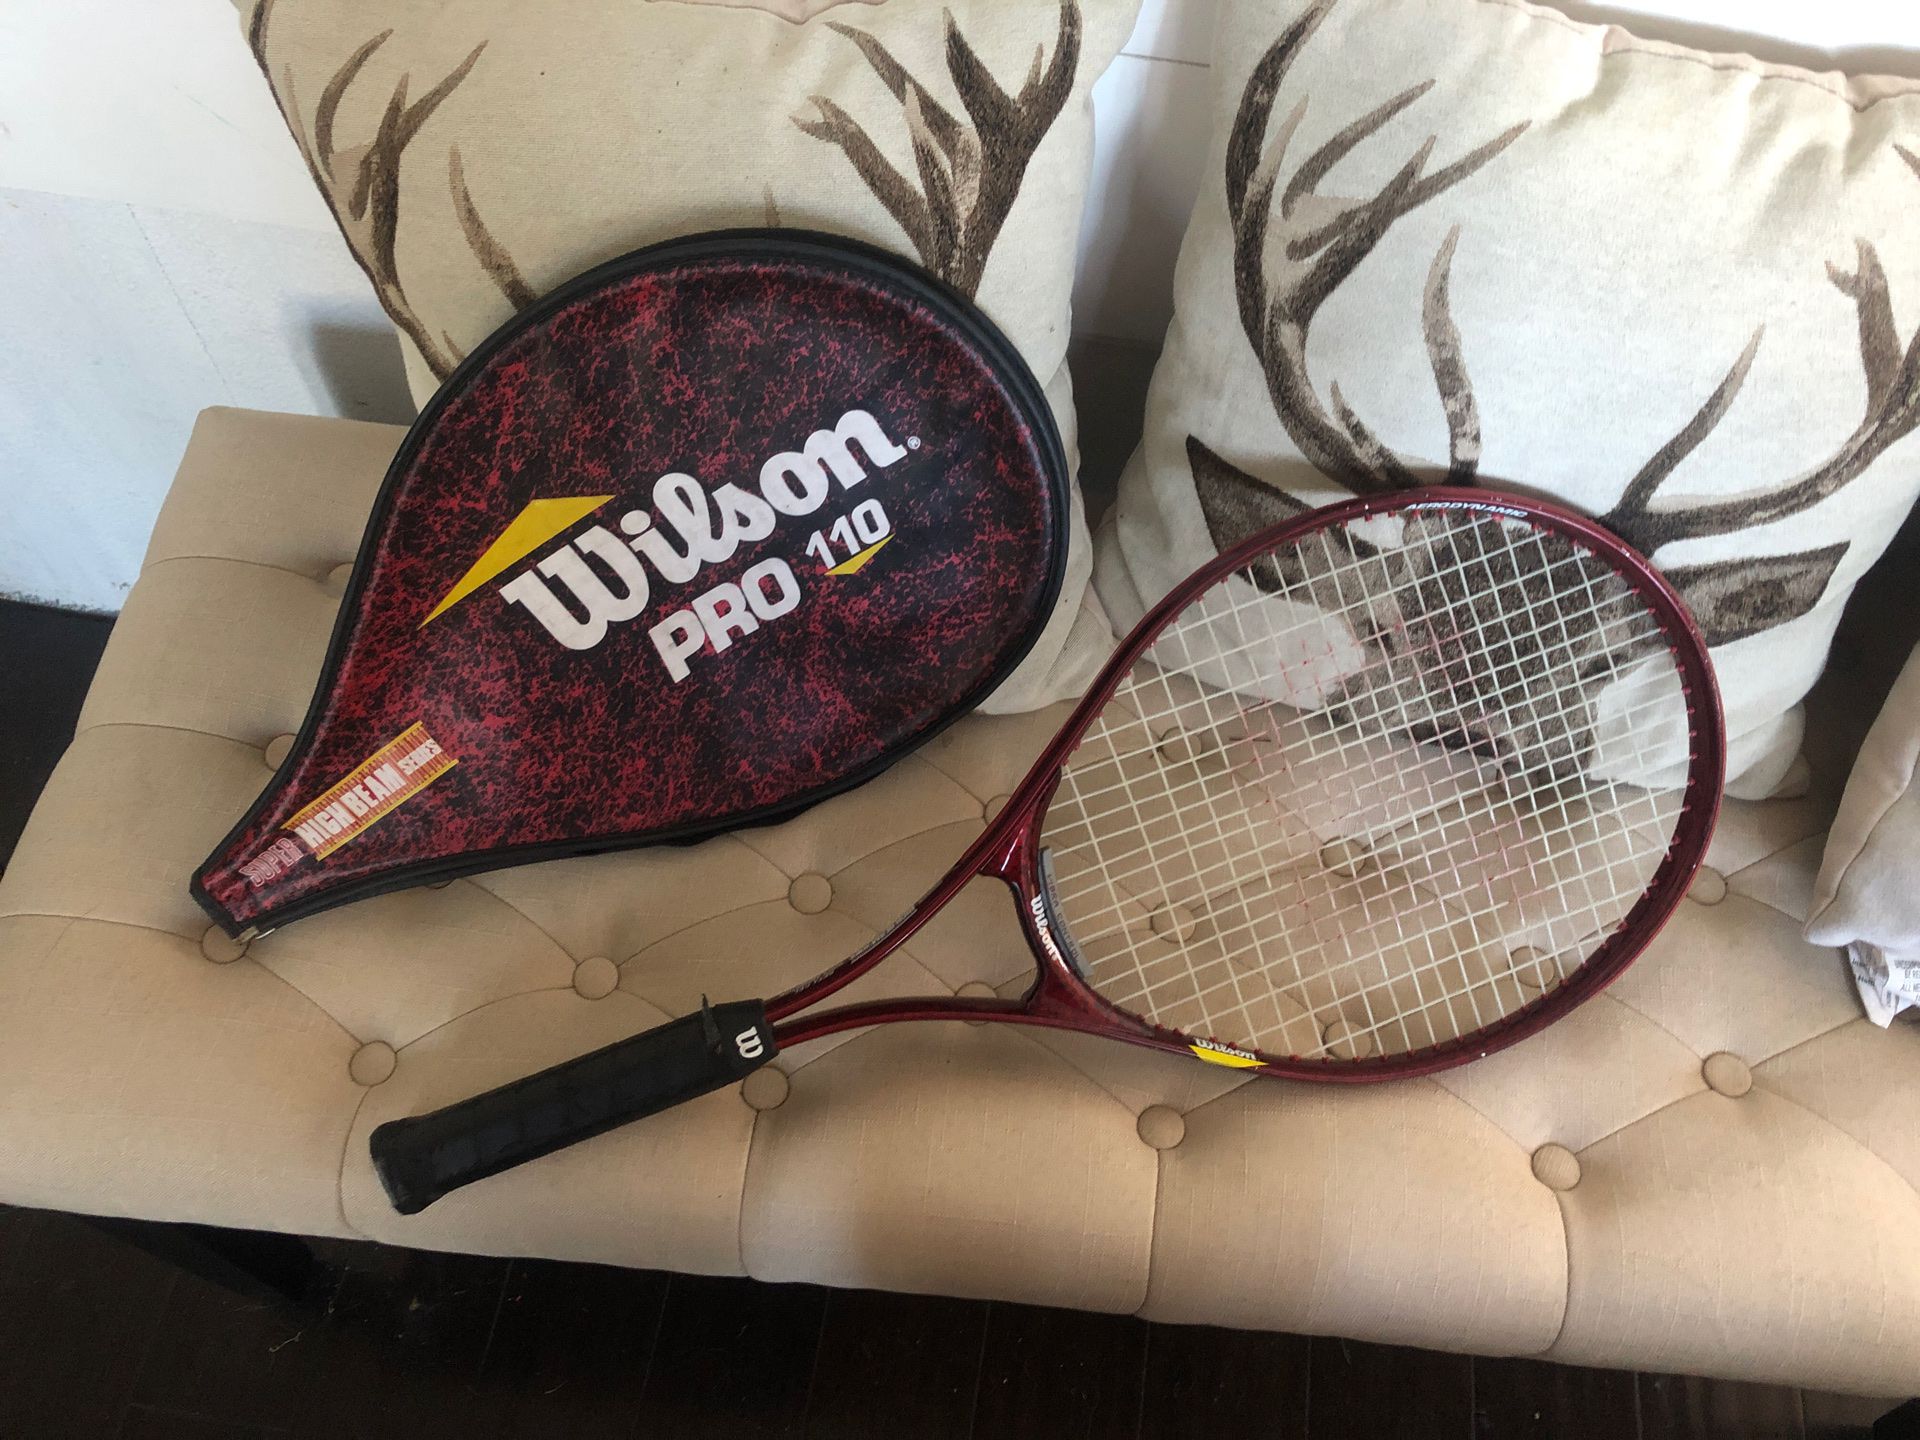 Wilson pro 110 tennis racket